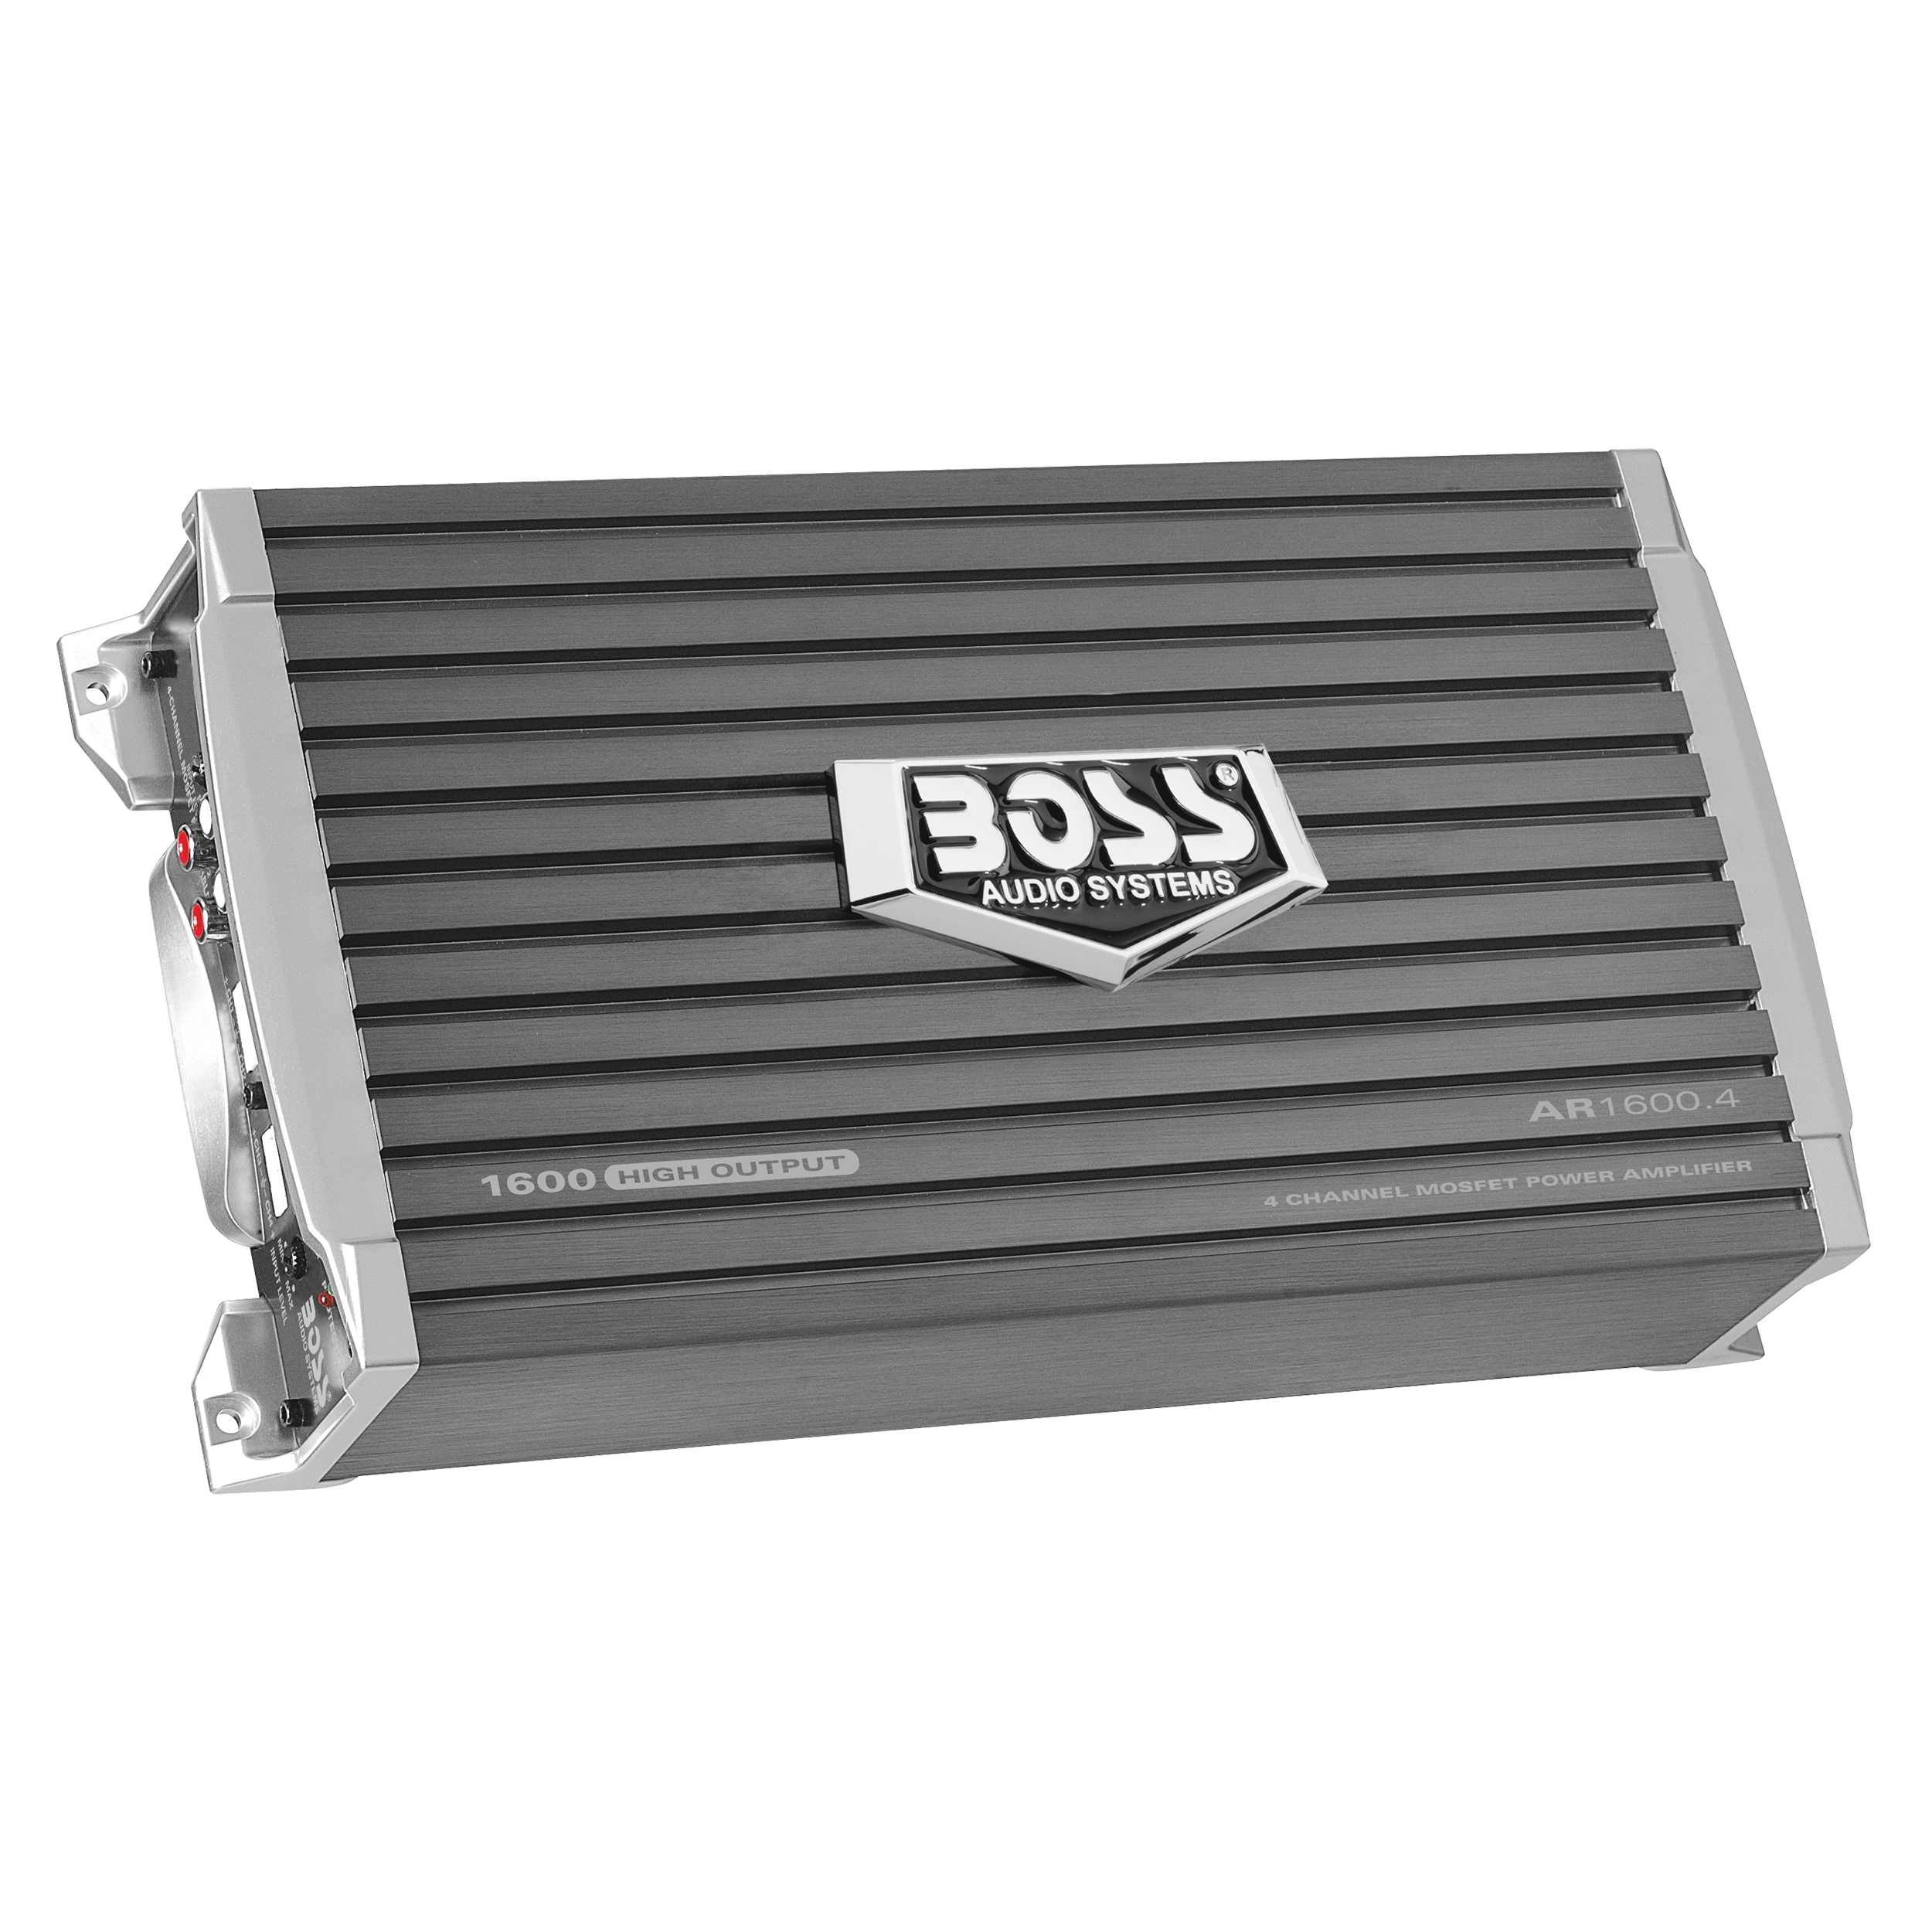 90%OFF!】 Boss Audio Systems AVA-AR1600.2 2-Channel Mosfet Amplifier 1600  Watts Peak Power